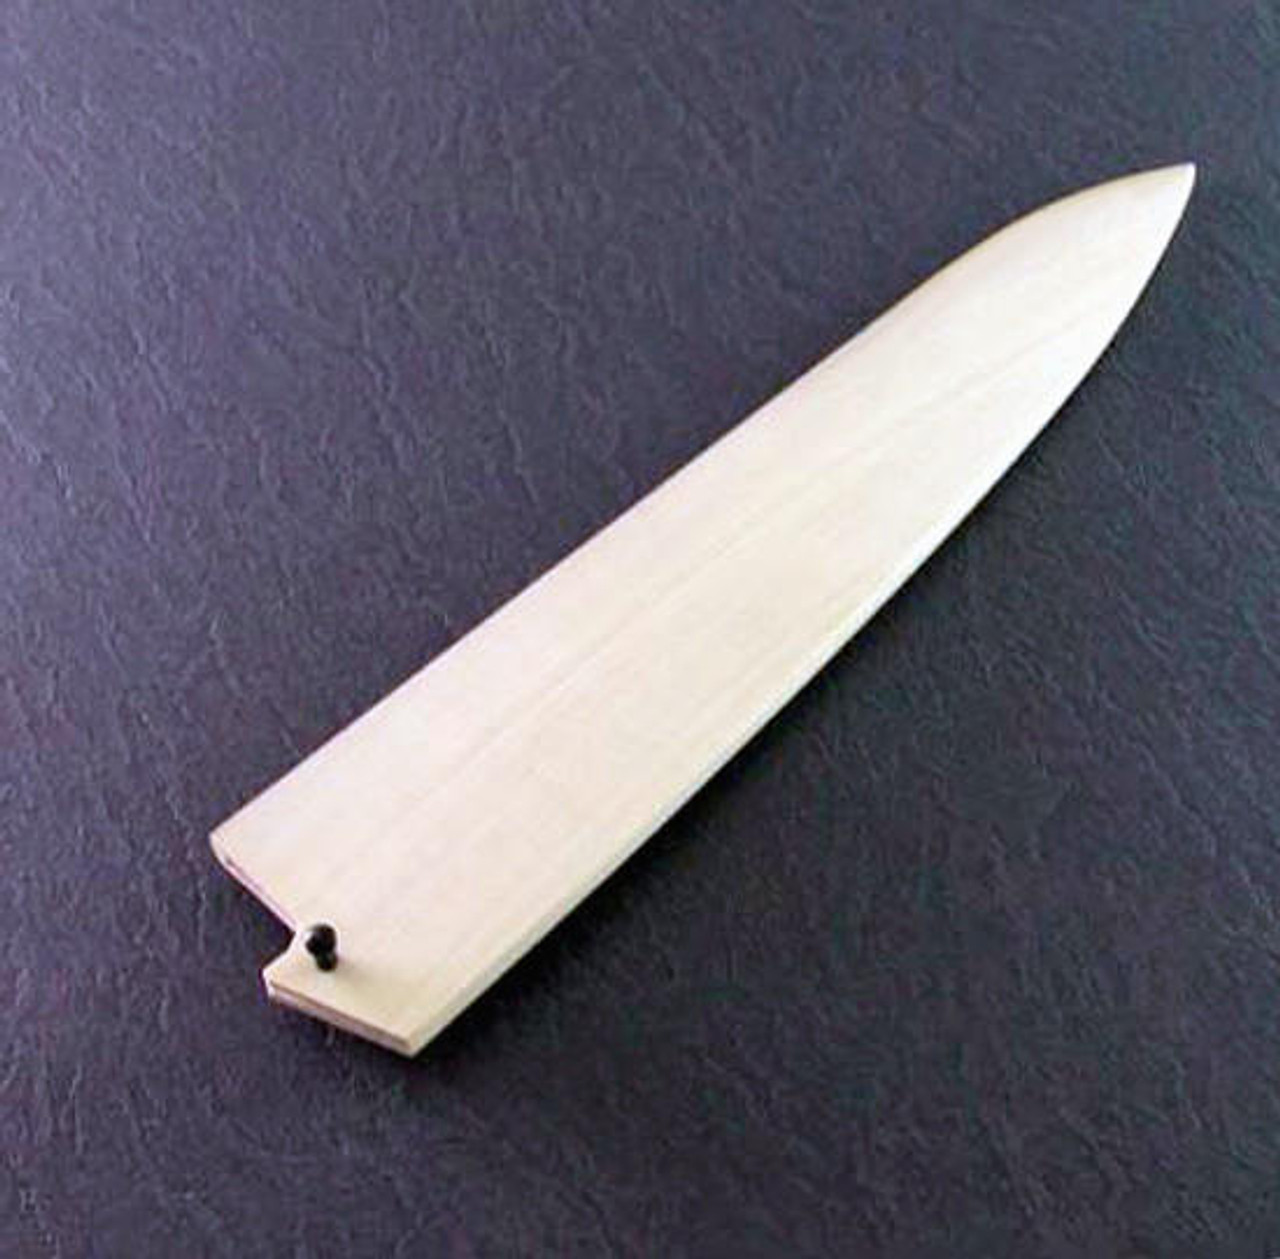 Kyocera Kyocera Sheath fits up to 4 blade - The Kitchen Table